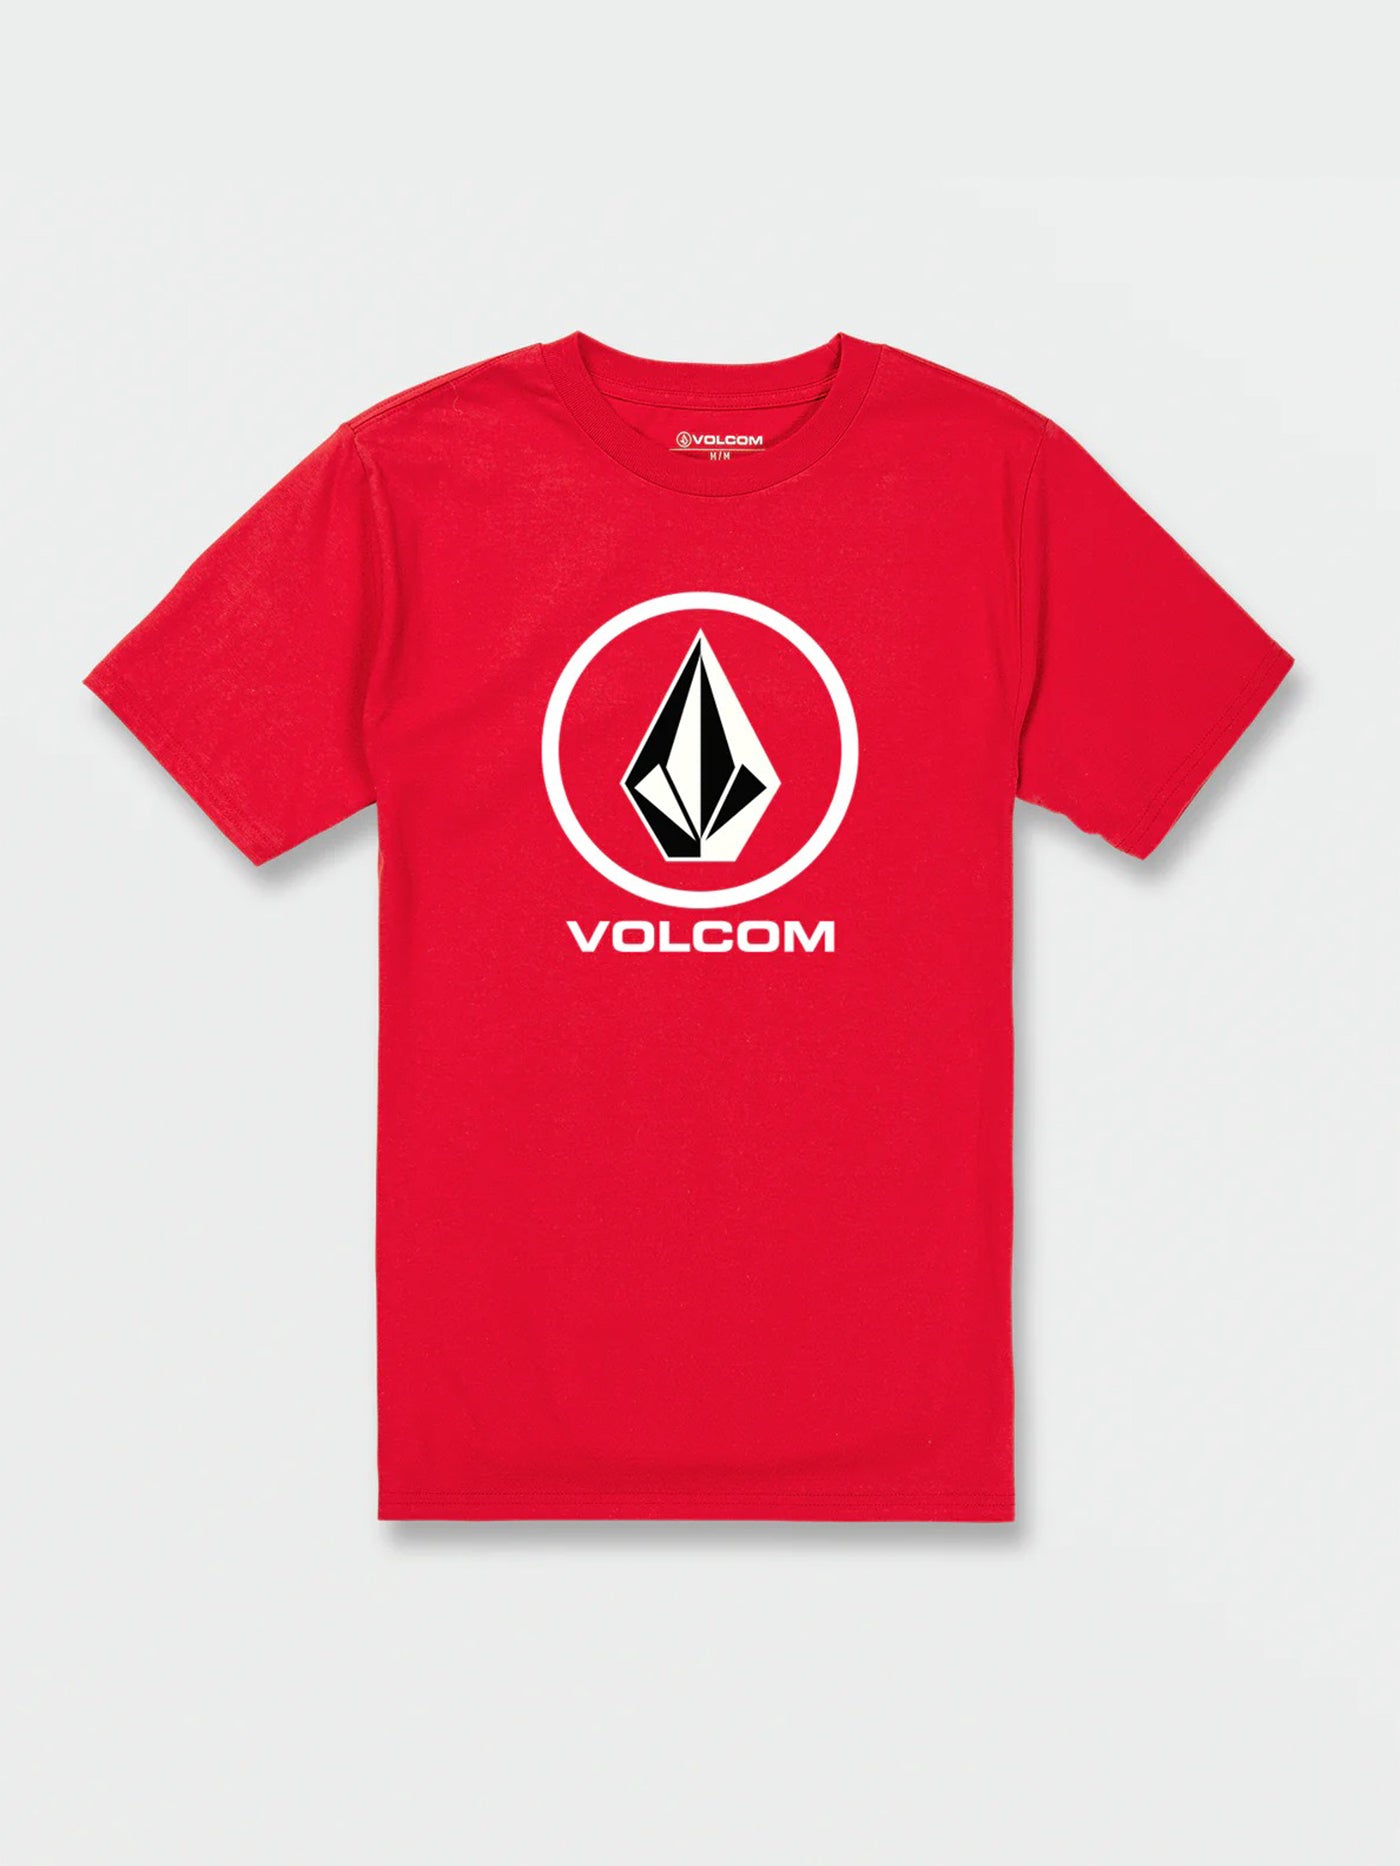 Volcom Crisp Stone T-Shirt